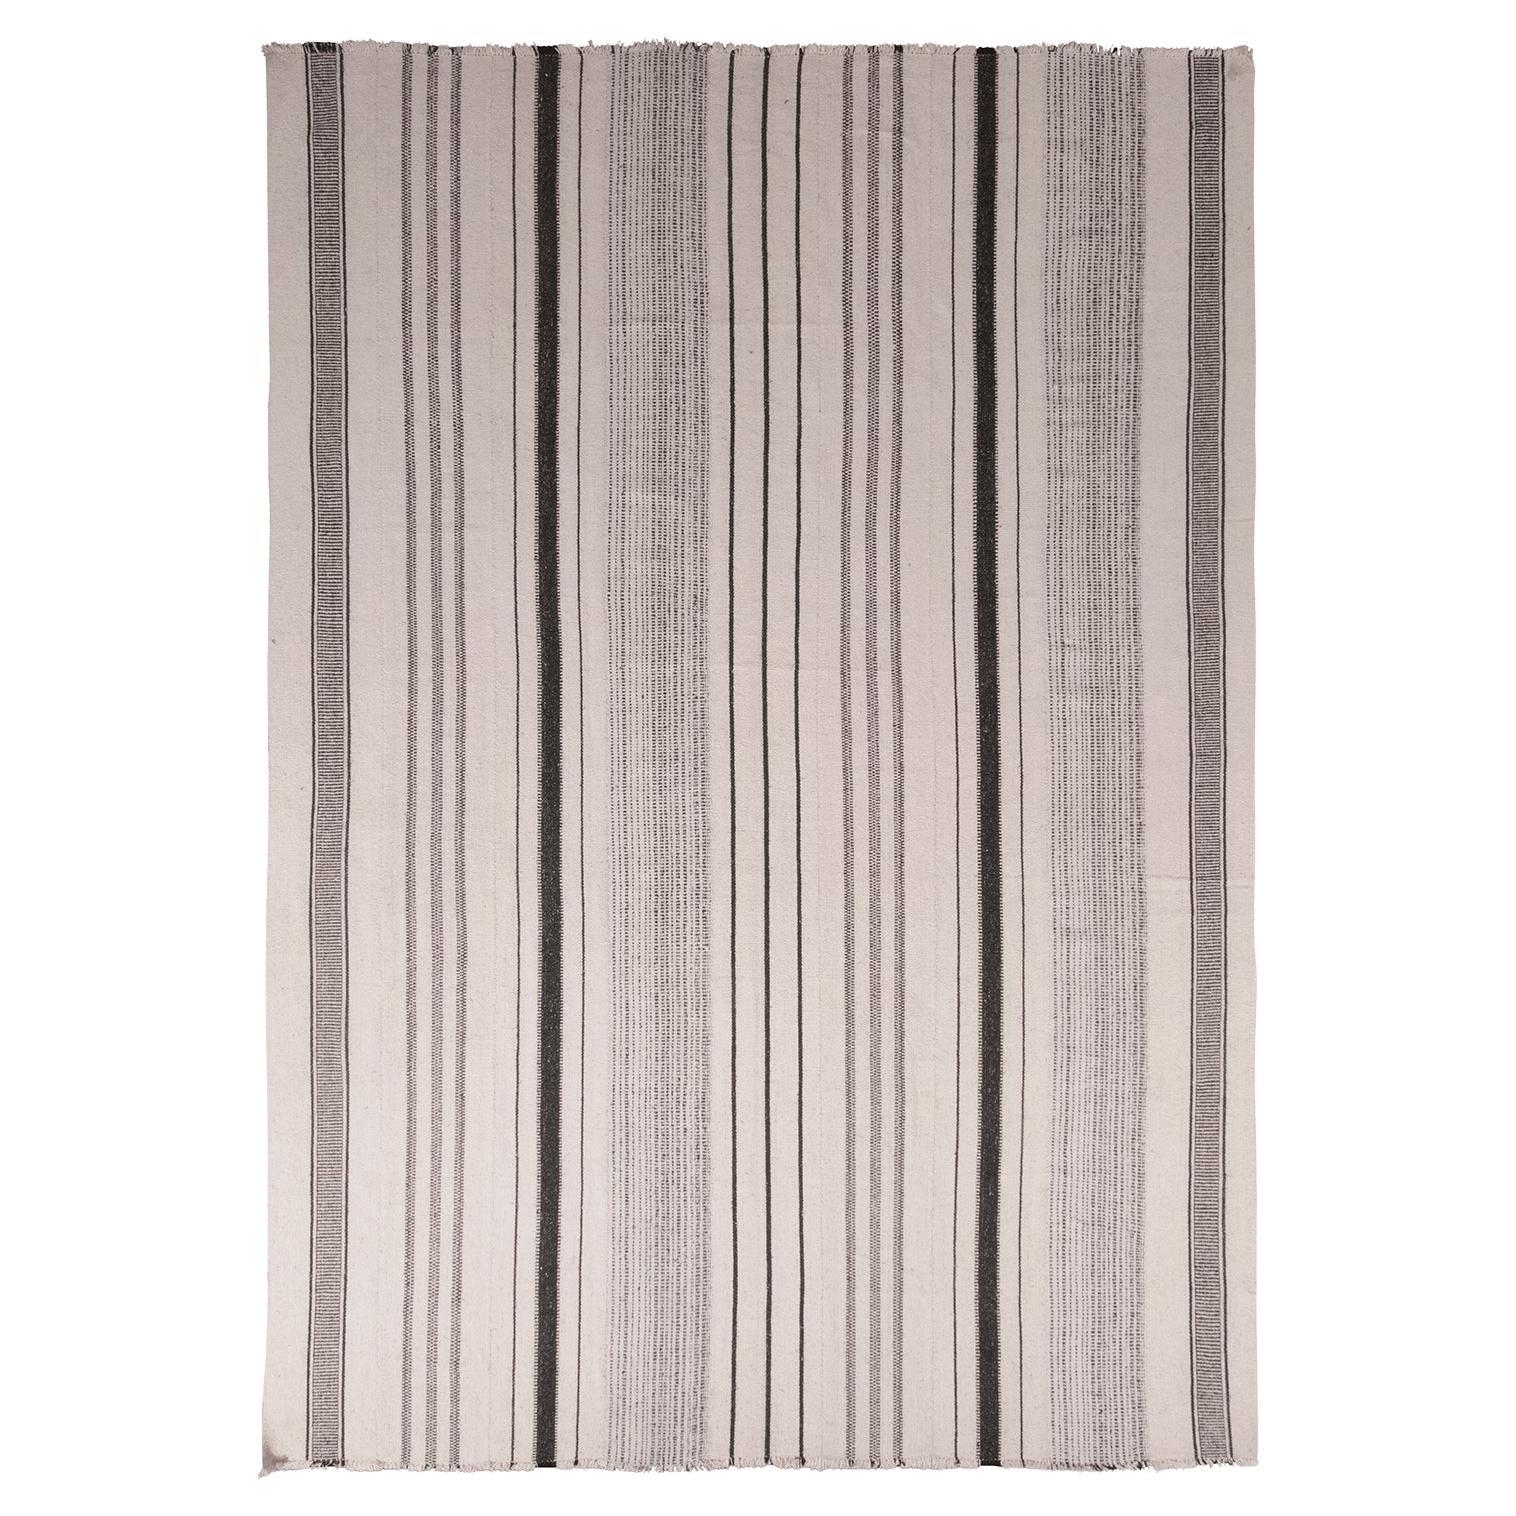 Vintage Turkish Kilim Rug in Black & White Striped Pattern by Rug & Kilim